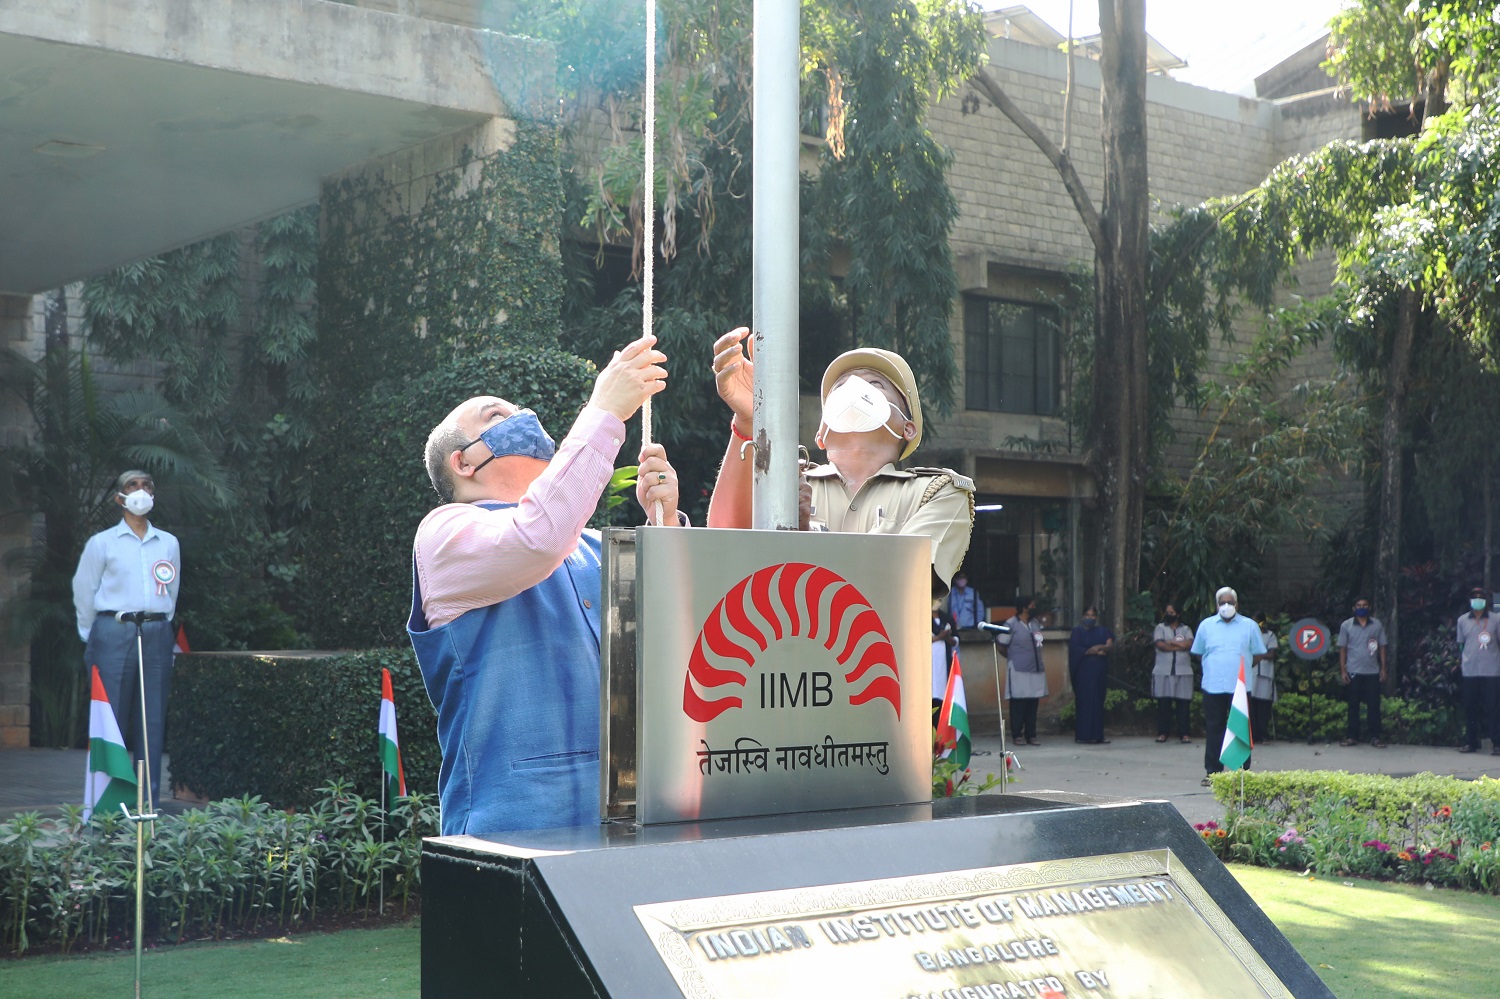 Professor Rishikesha T. Krishnan, Director, IIM Bangalore, unfurls the national flag to mark India’s 73rd Republic Day celebrations on campus.